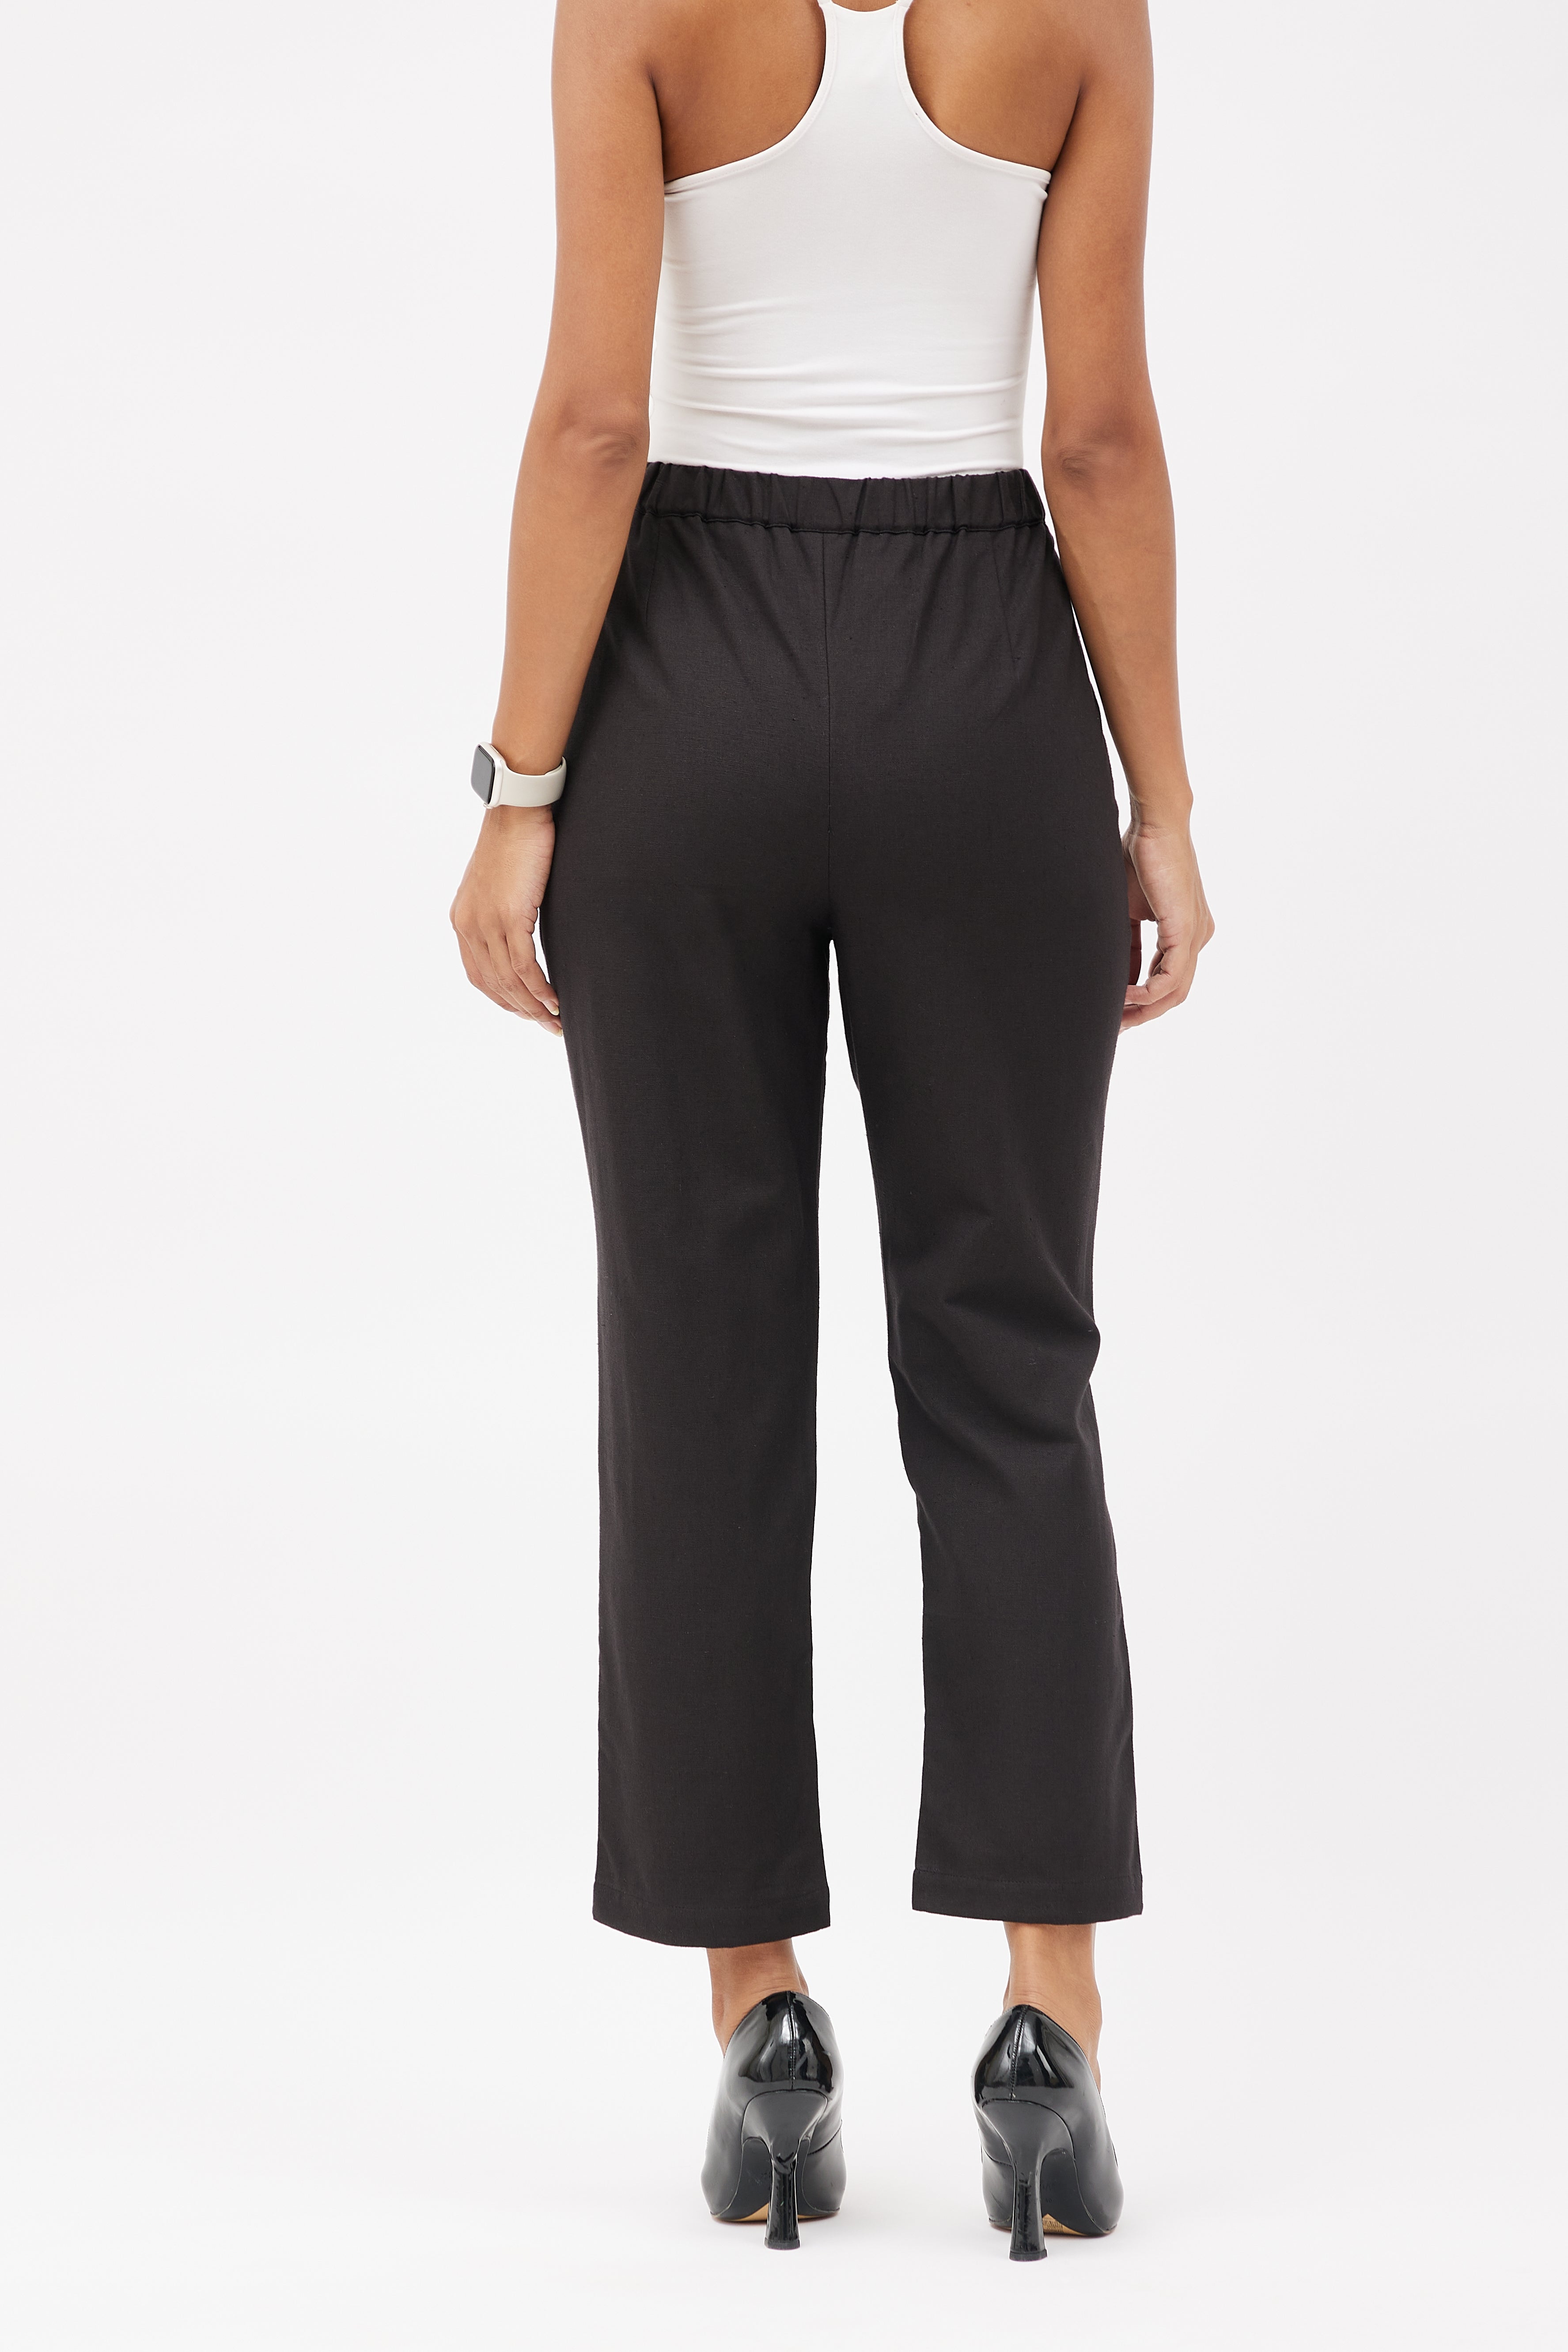 Classic Work Blazer & Trouser Women's Linen Pant Suit Set - Beige